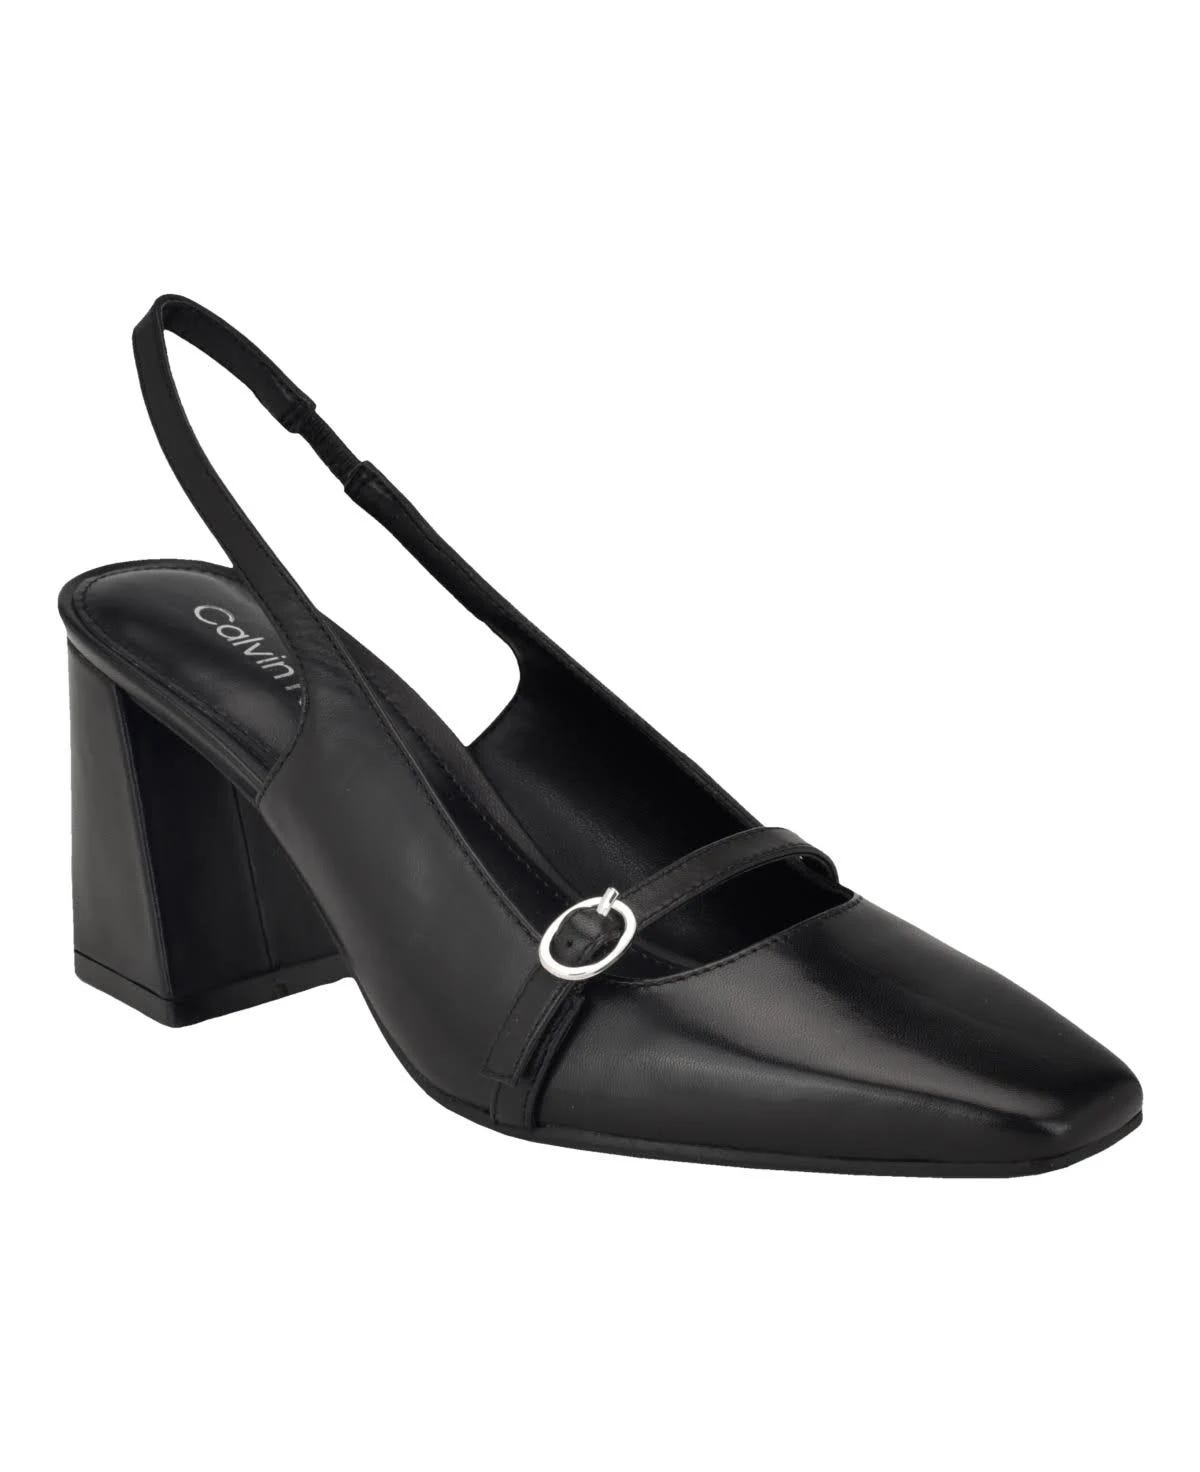 Stylish Black Square Toe Block Heel Pumps from Calvin Klein | Image